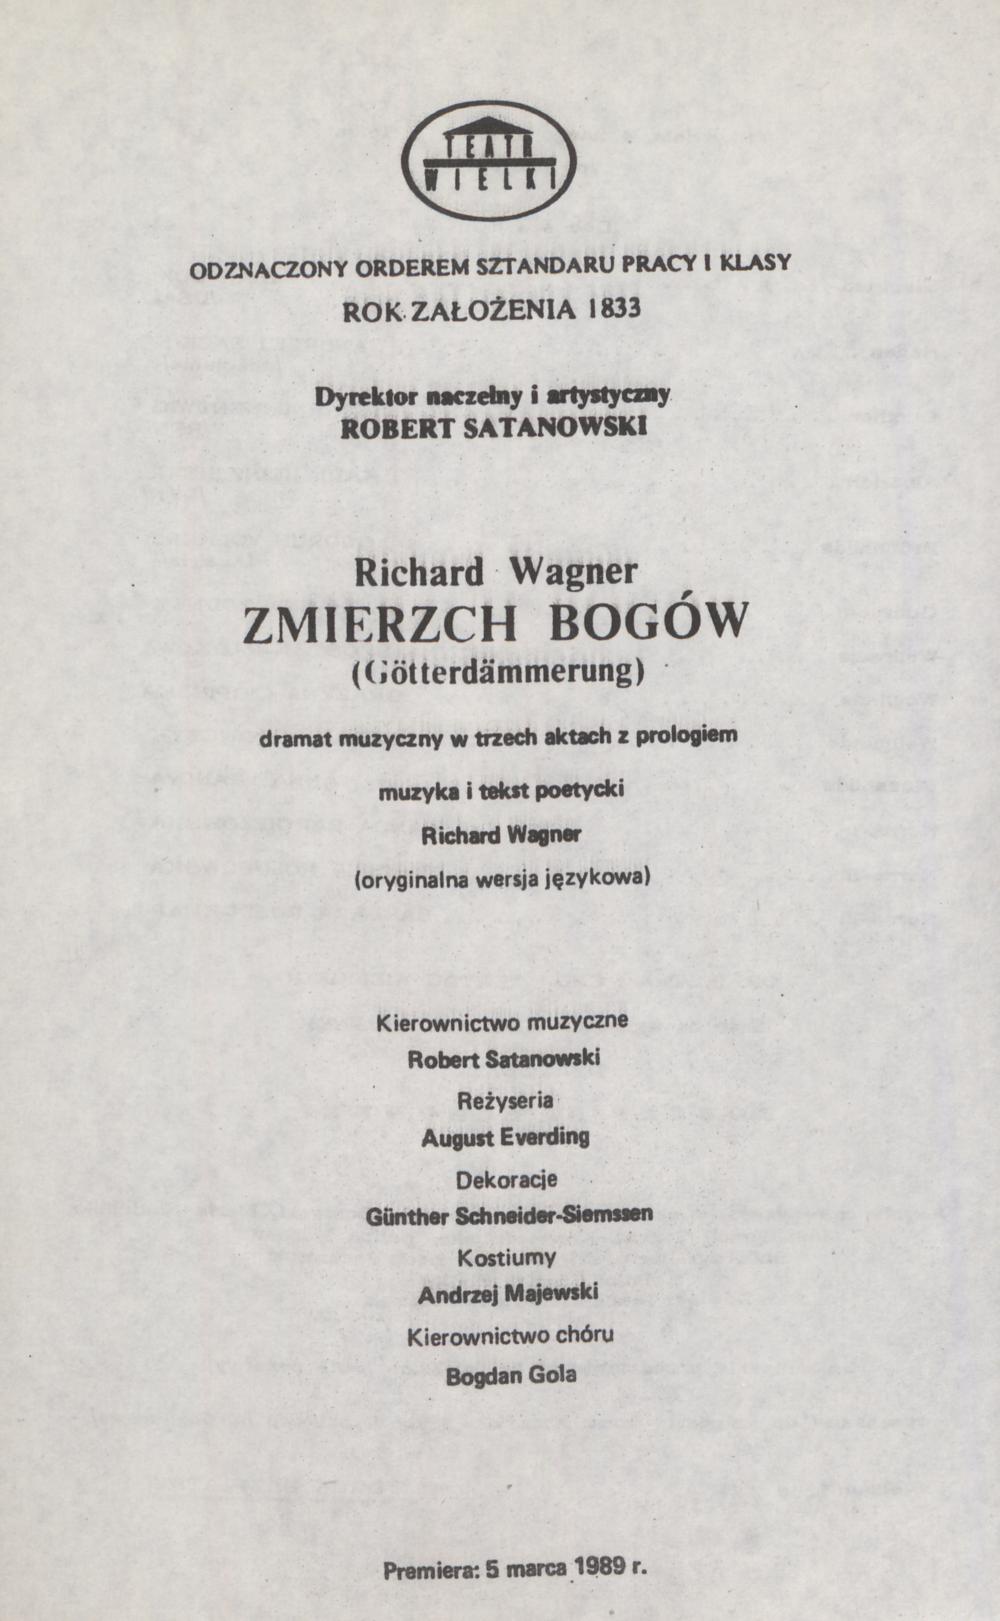 Wkładka obsadowa „Zmierzch bogów” (Götterdämmerung) Richard Wagner 04-02-1990